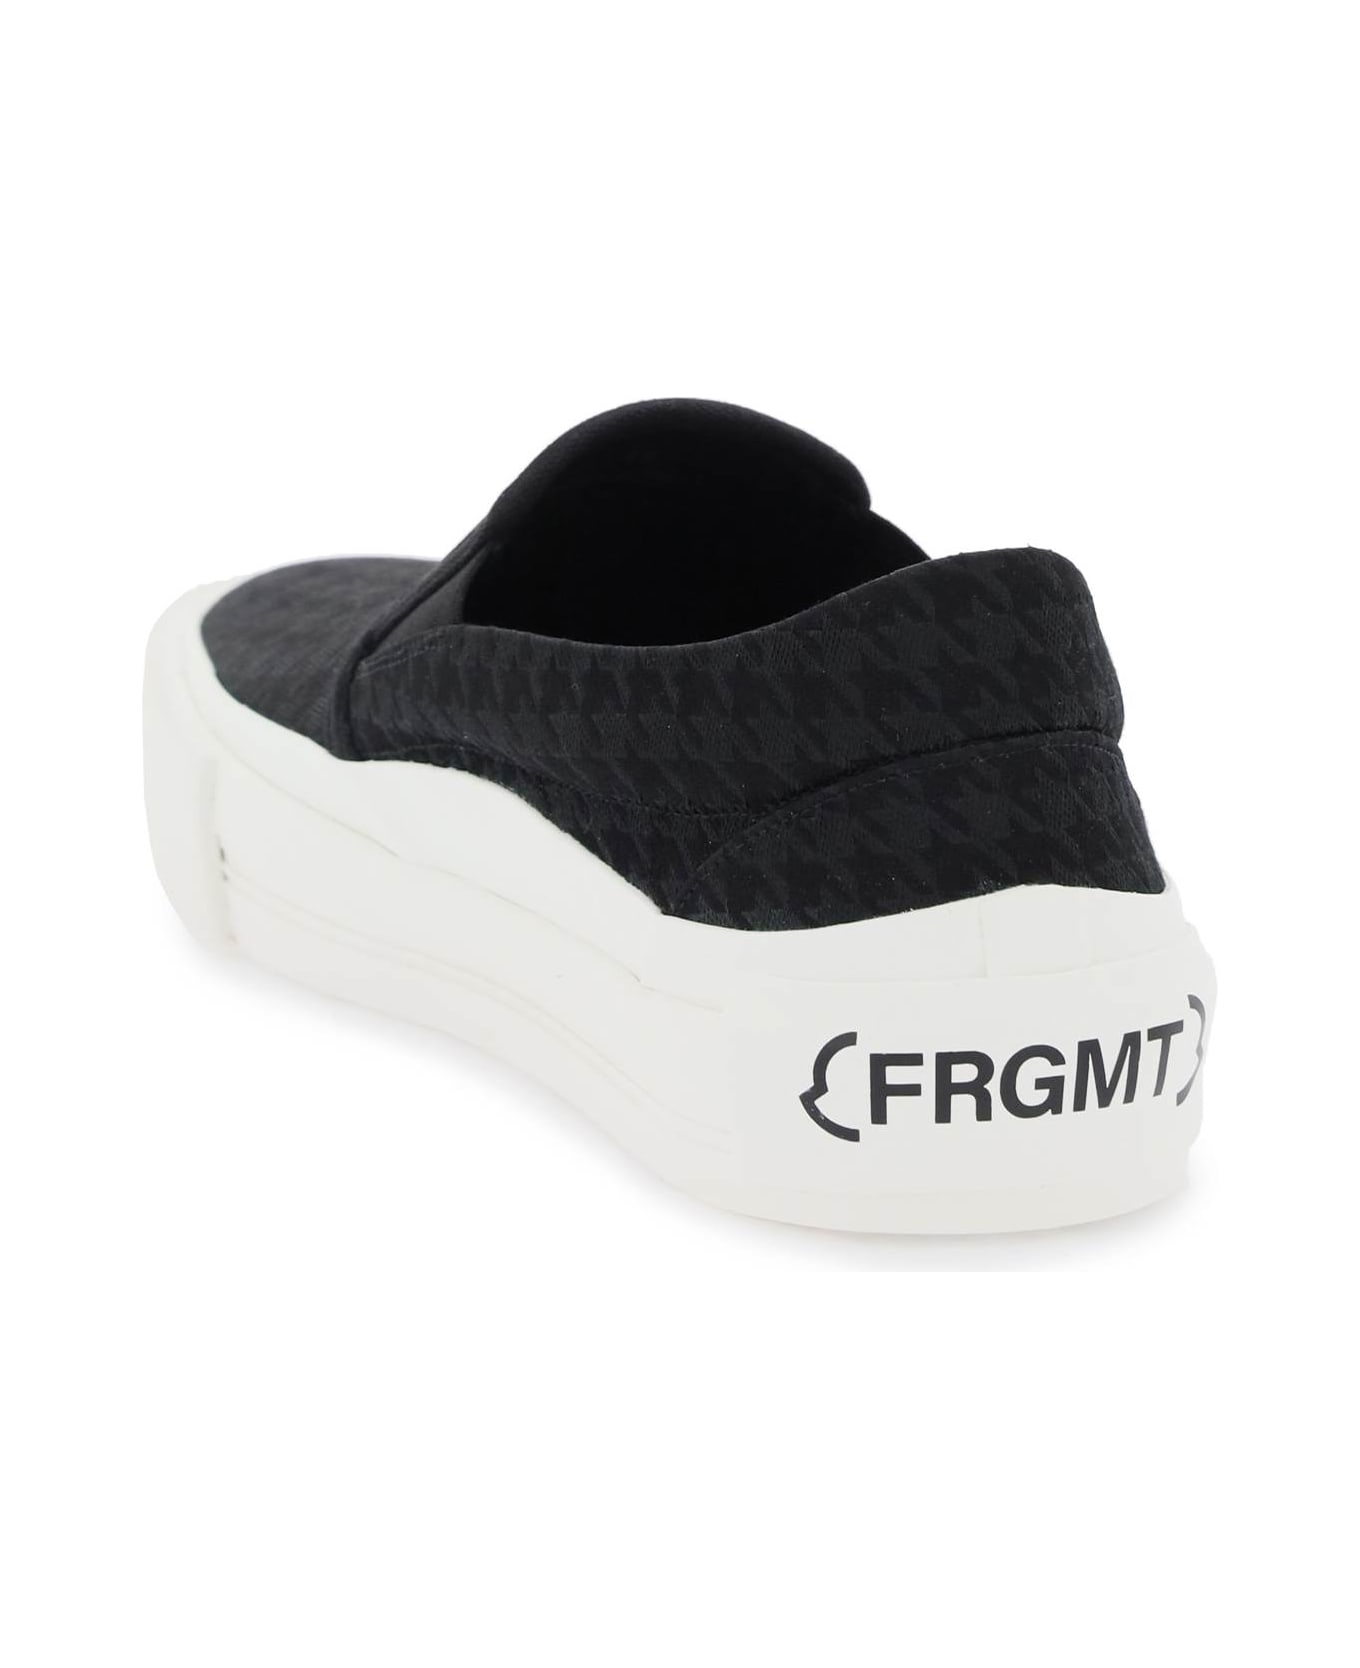 Moncler Genius Moncler X Frgmt - Vulcan Slip-on Sneakers - Black スニーカー